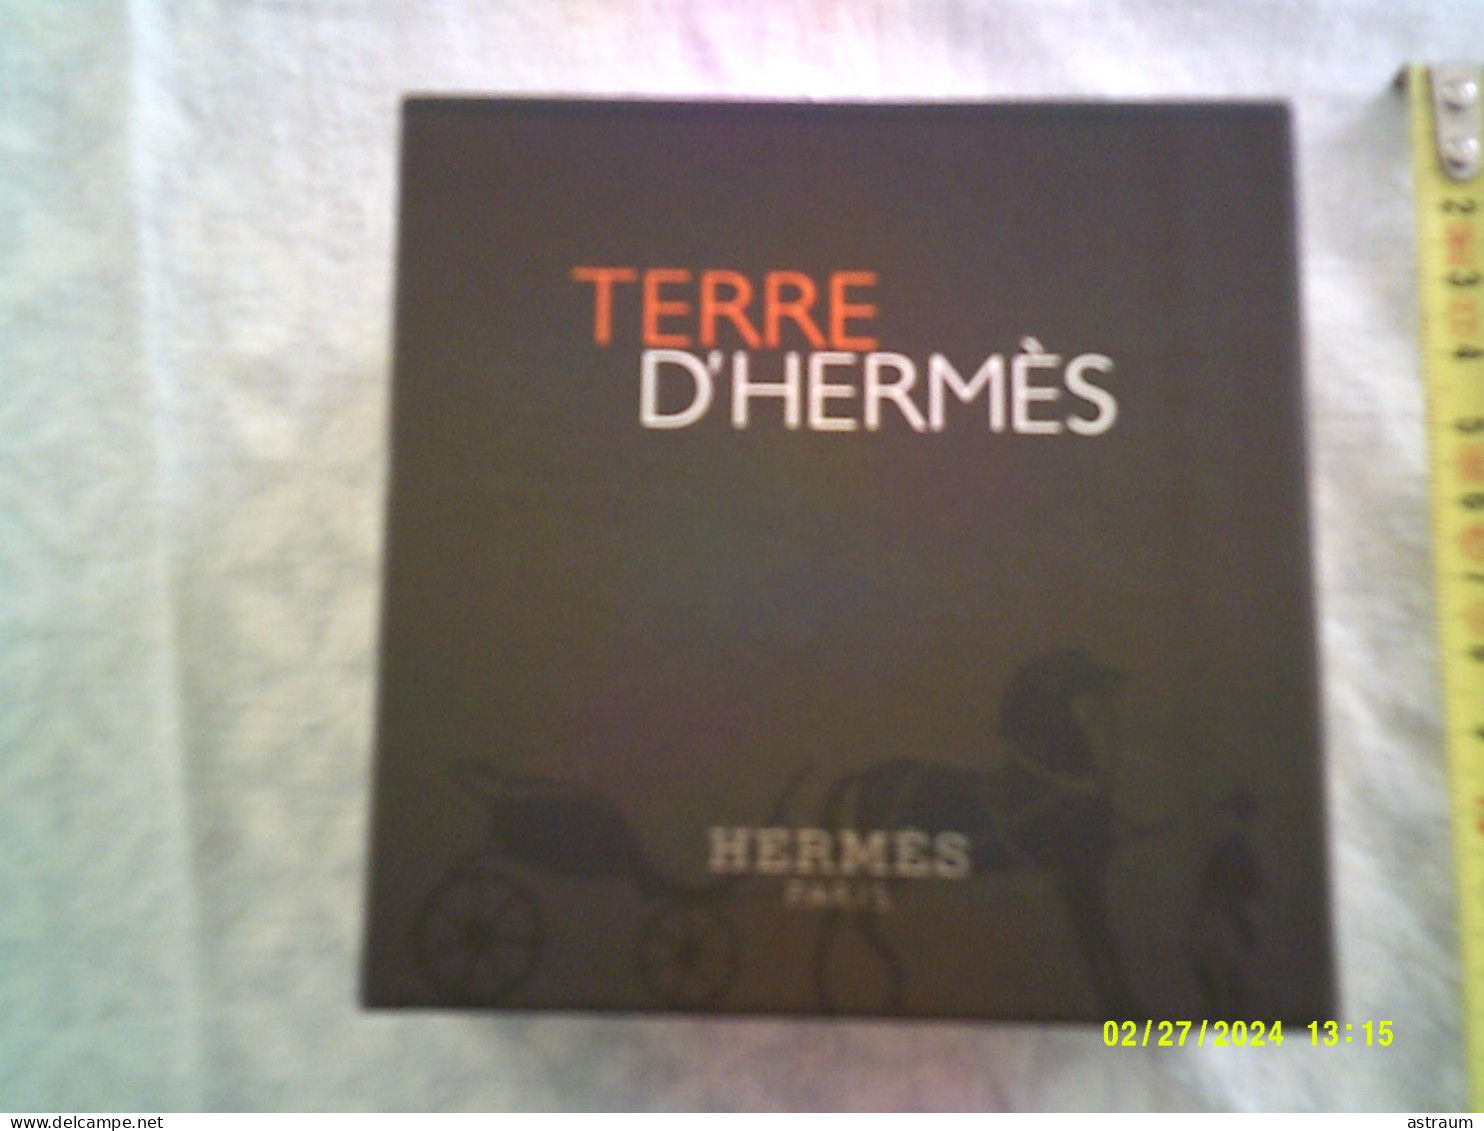 Coffret 2 Miniature Vaporisateur Parfum Hermes - EDT - Terre D'hermes Plein 12,5ml + Tube Emulsion Apres Rasage 15ml - Miniaturen Herrendüfte (mit Verpackung)